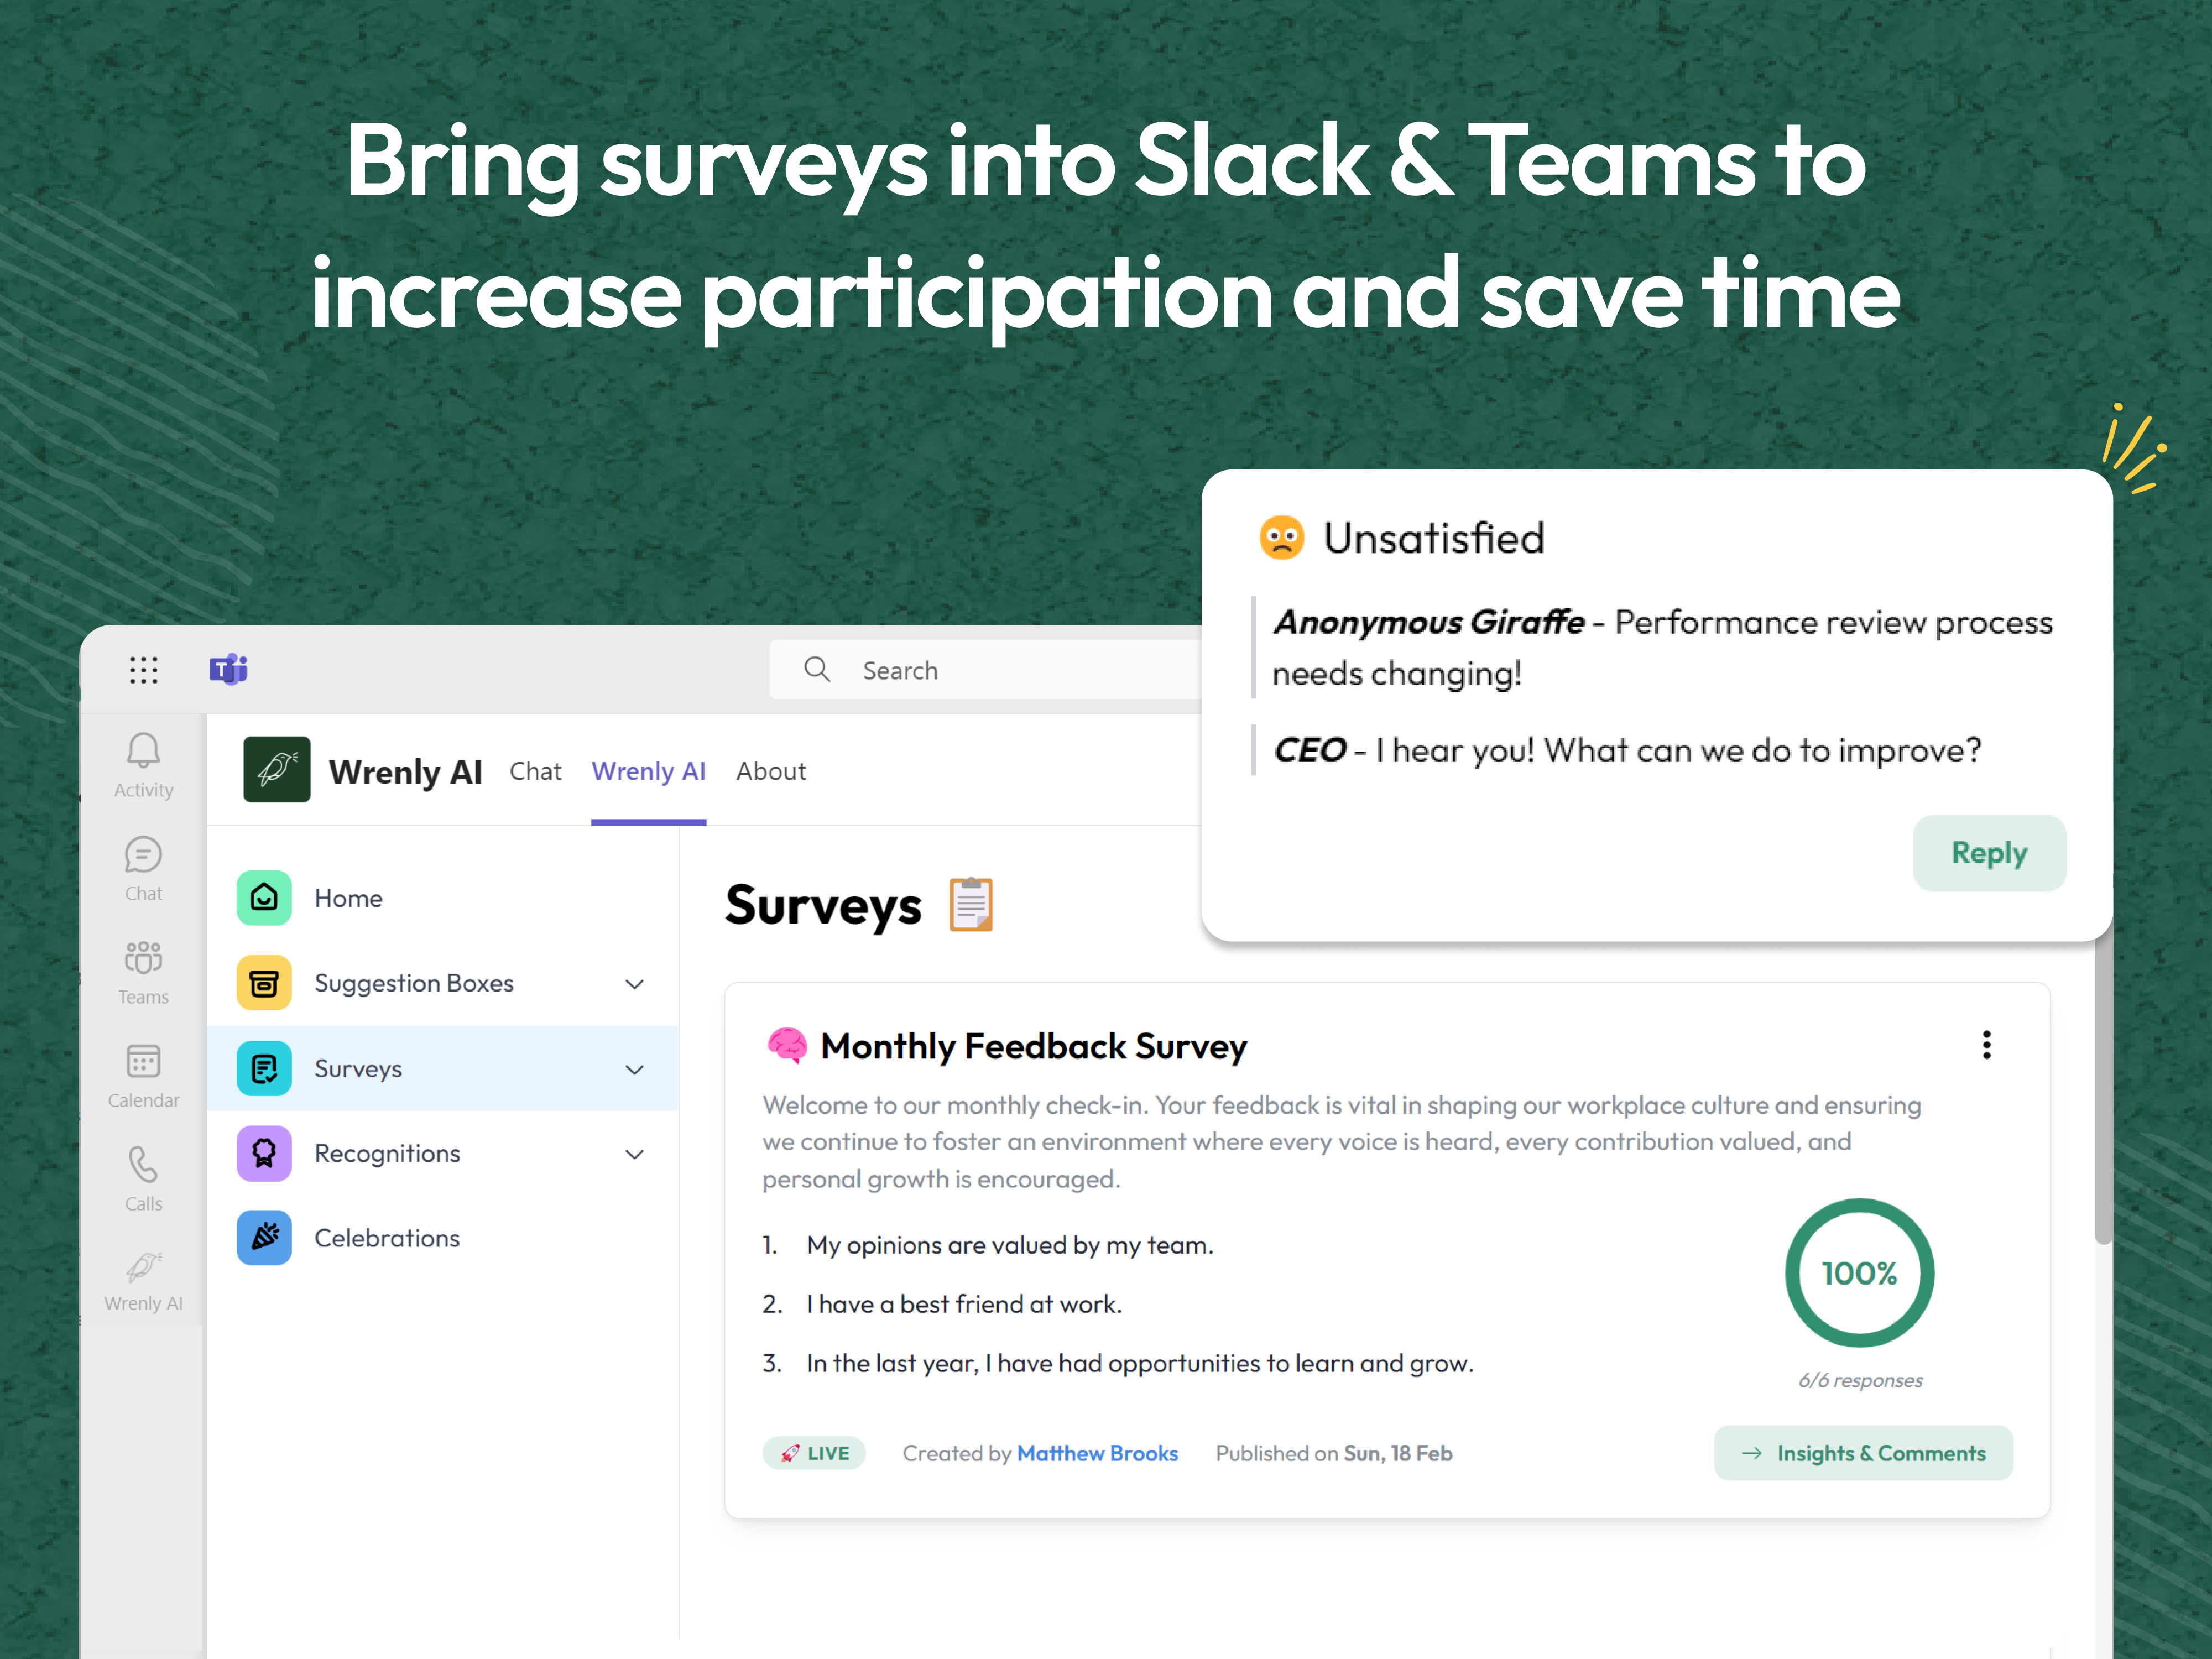 Bring surveys into Slack & Teams to increase participation and save time